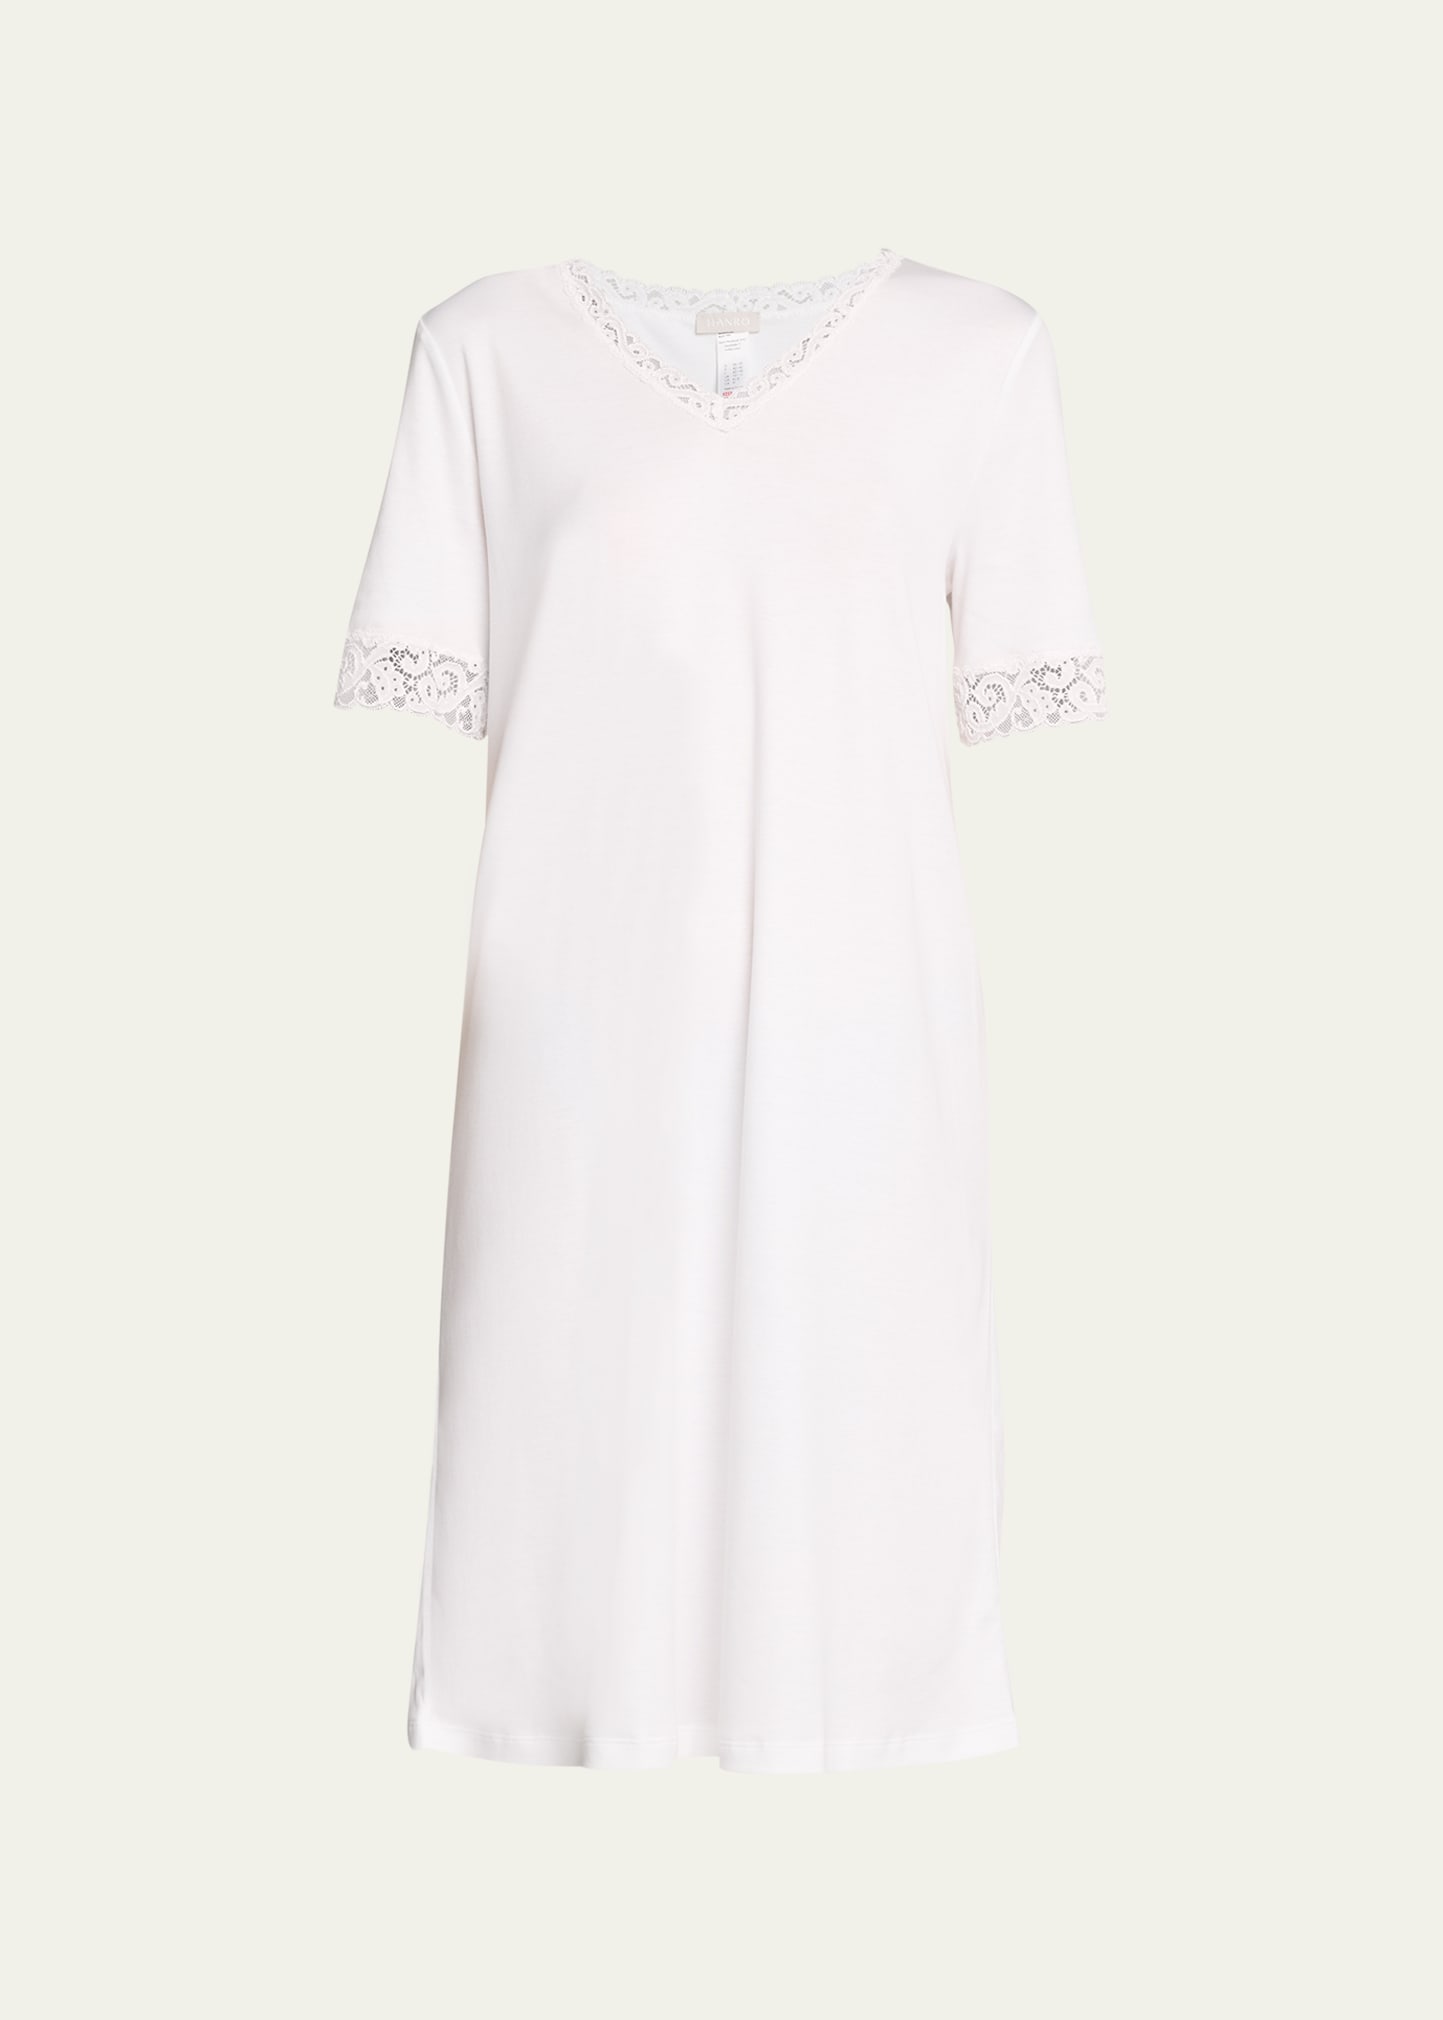 HANRO Nightgowns for Women